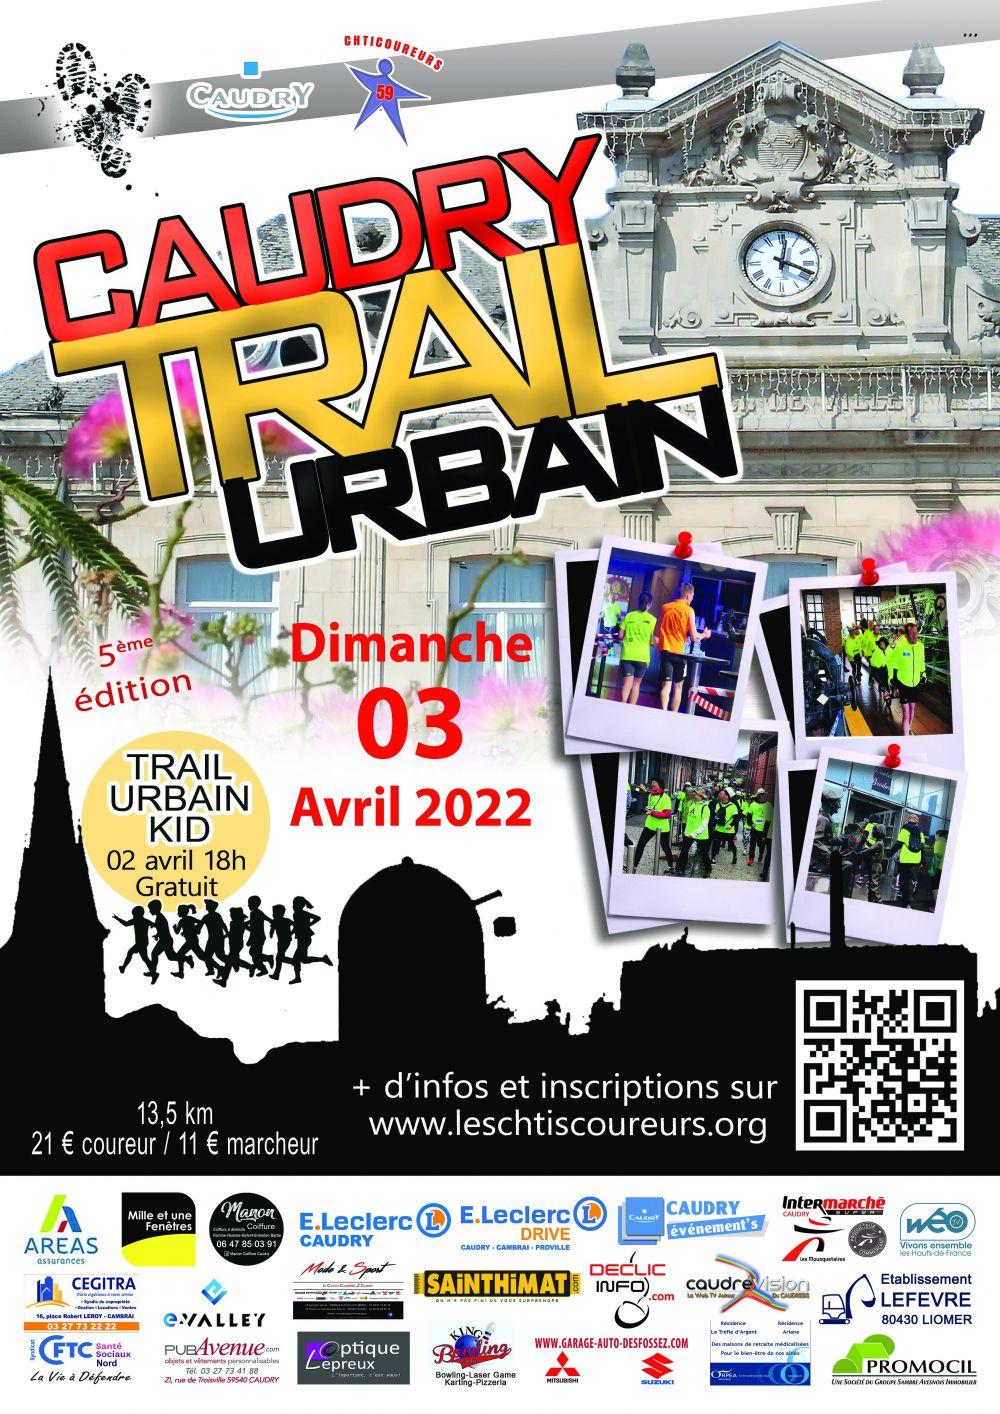 Caudry trail urbain 5eme edition 0